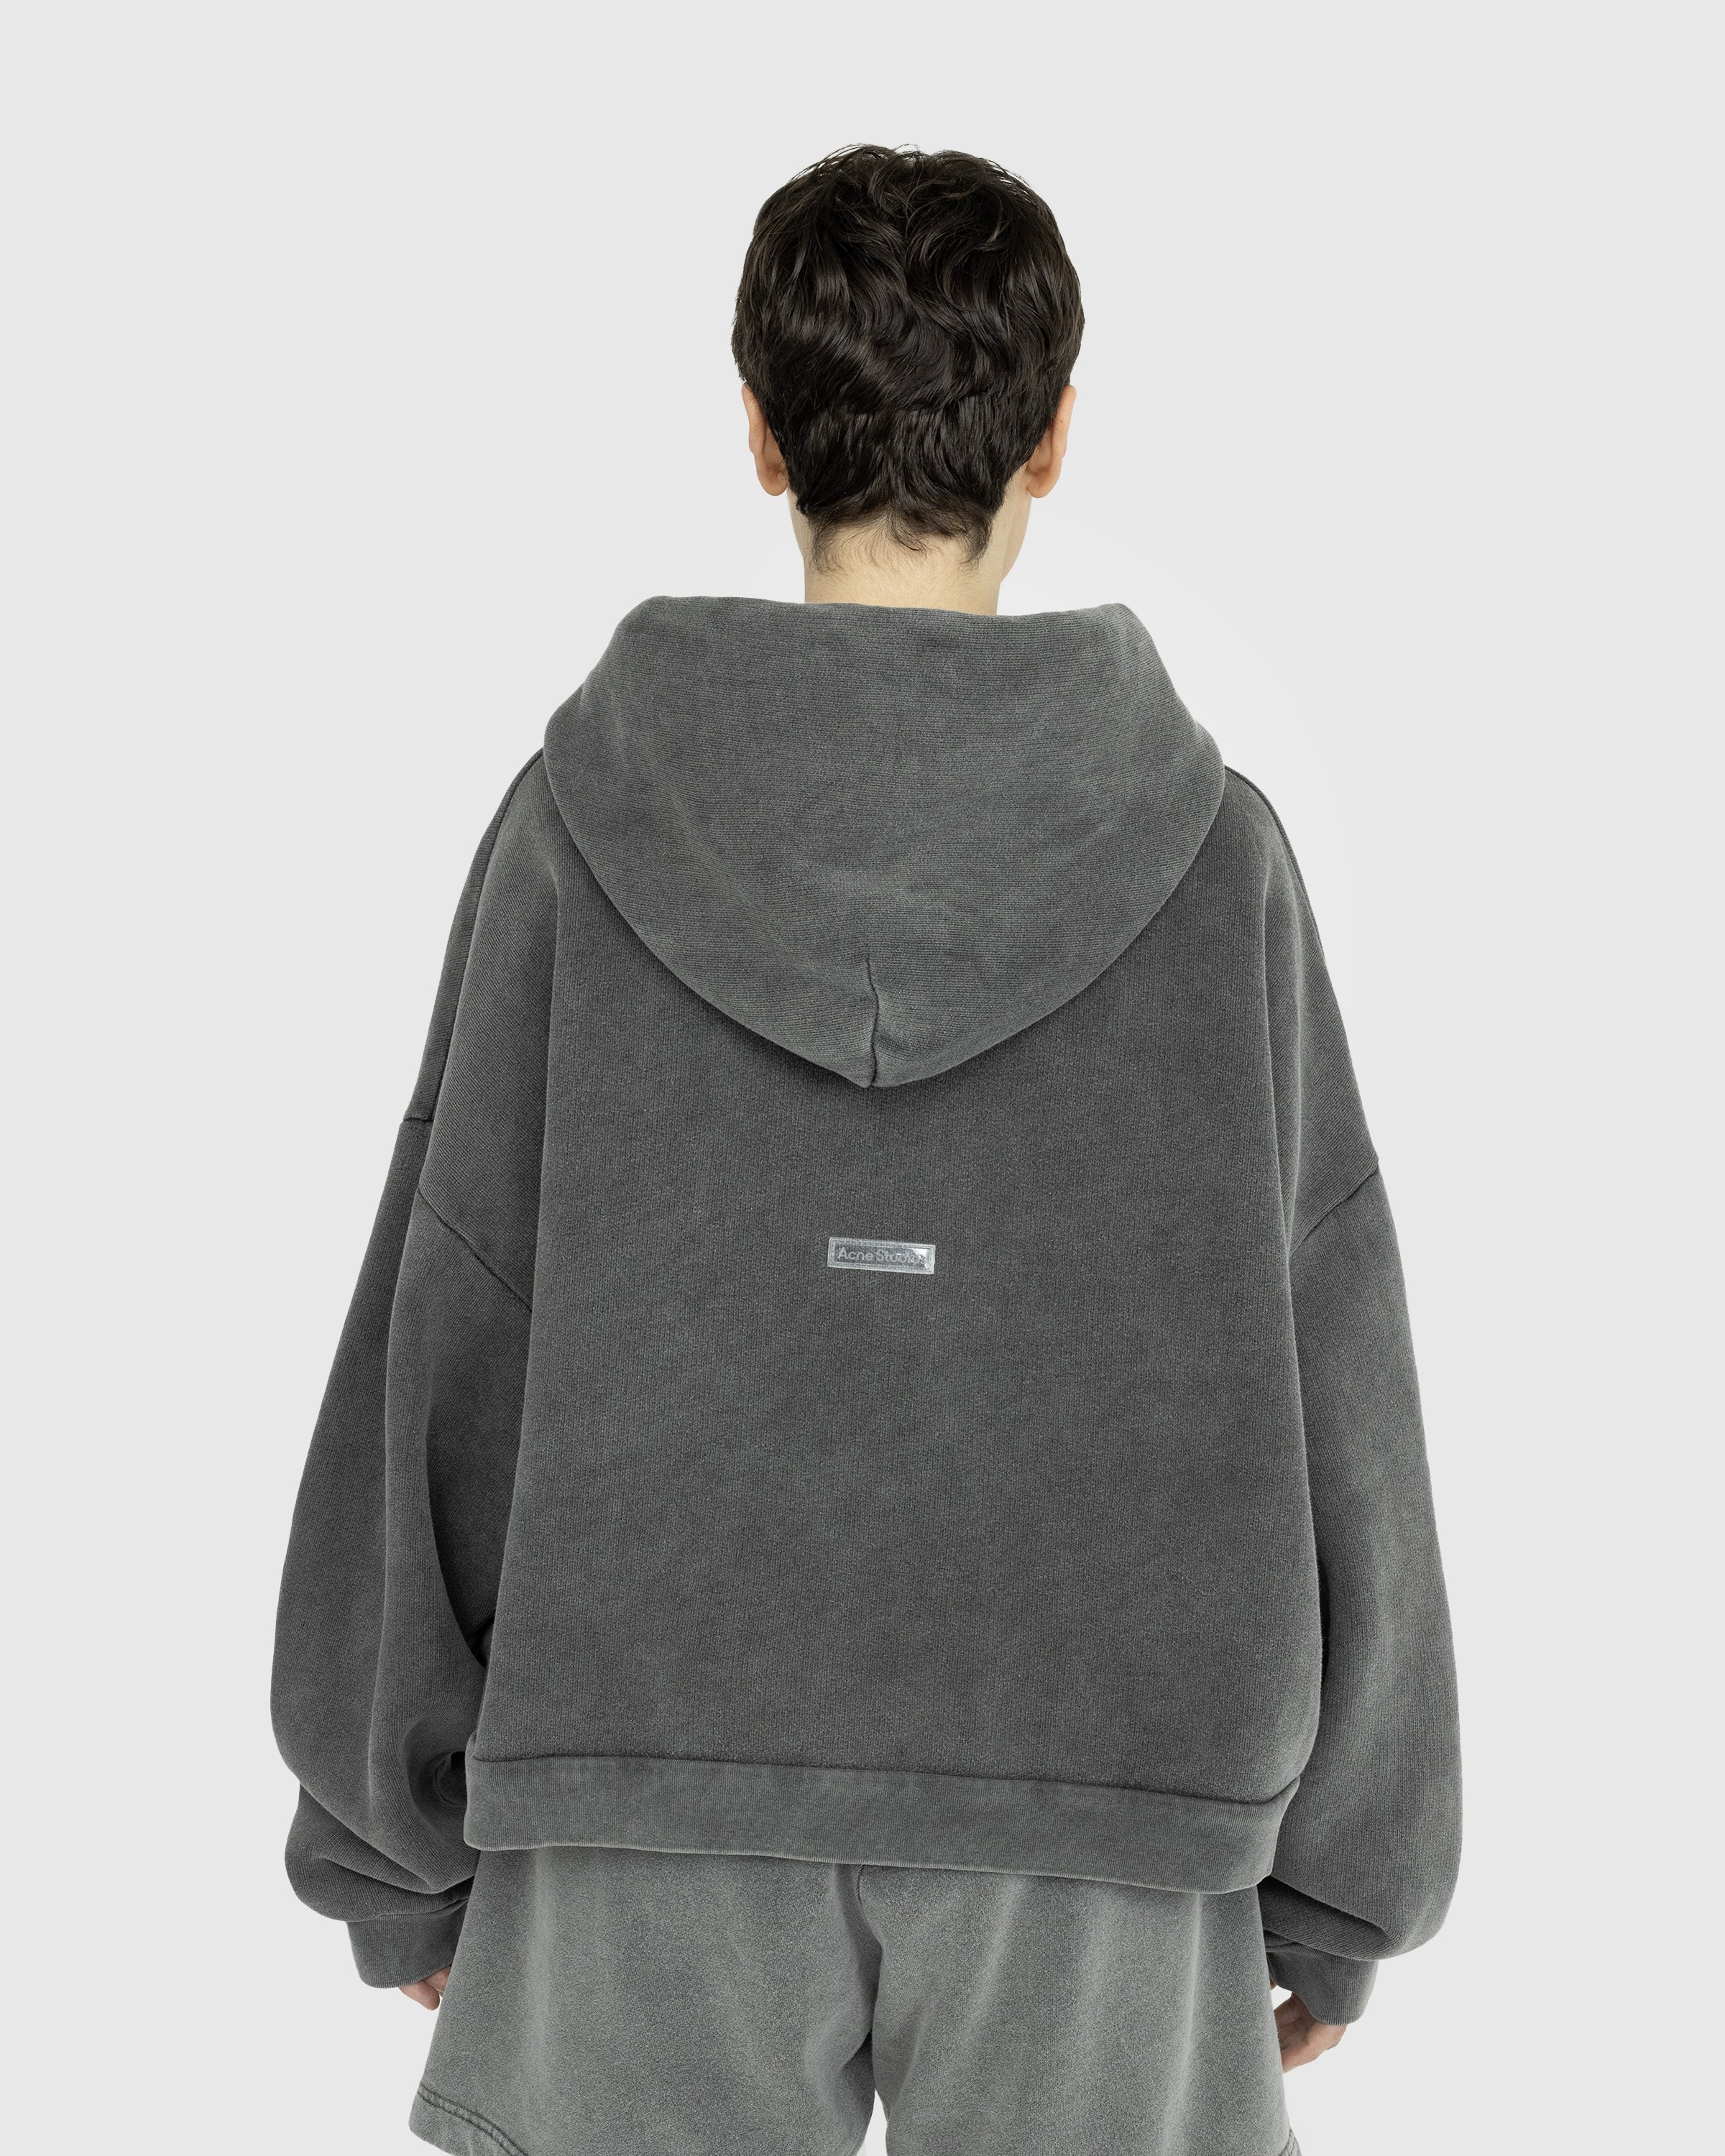 Acne Studios - Hooded Sweatshirt Faded Black - Clothing - Grey - Image 3